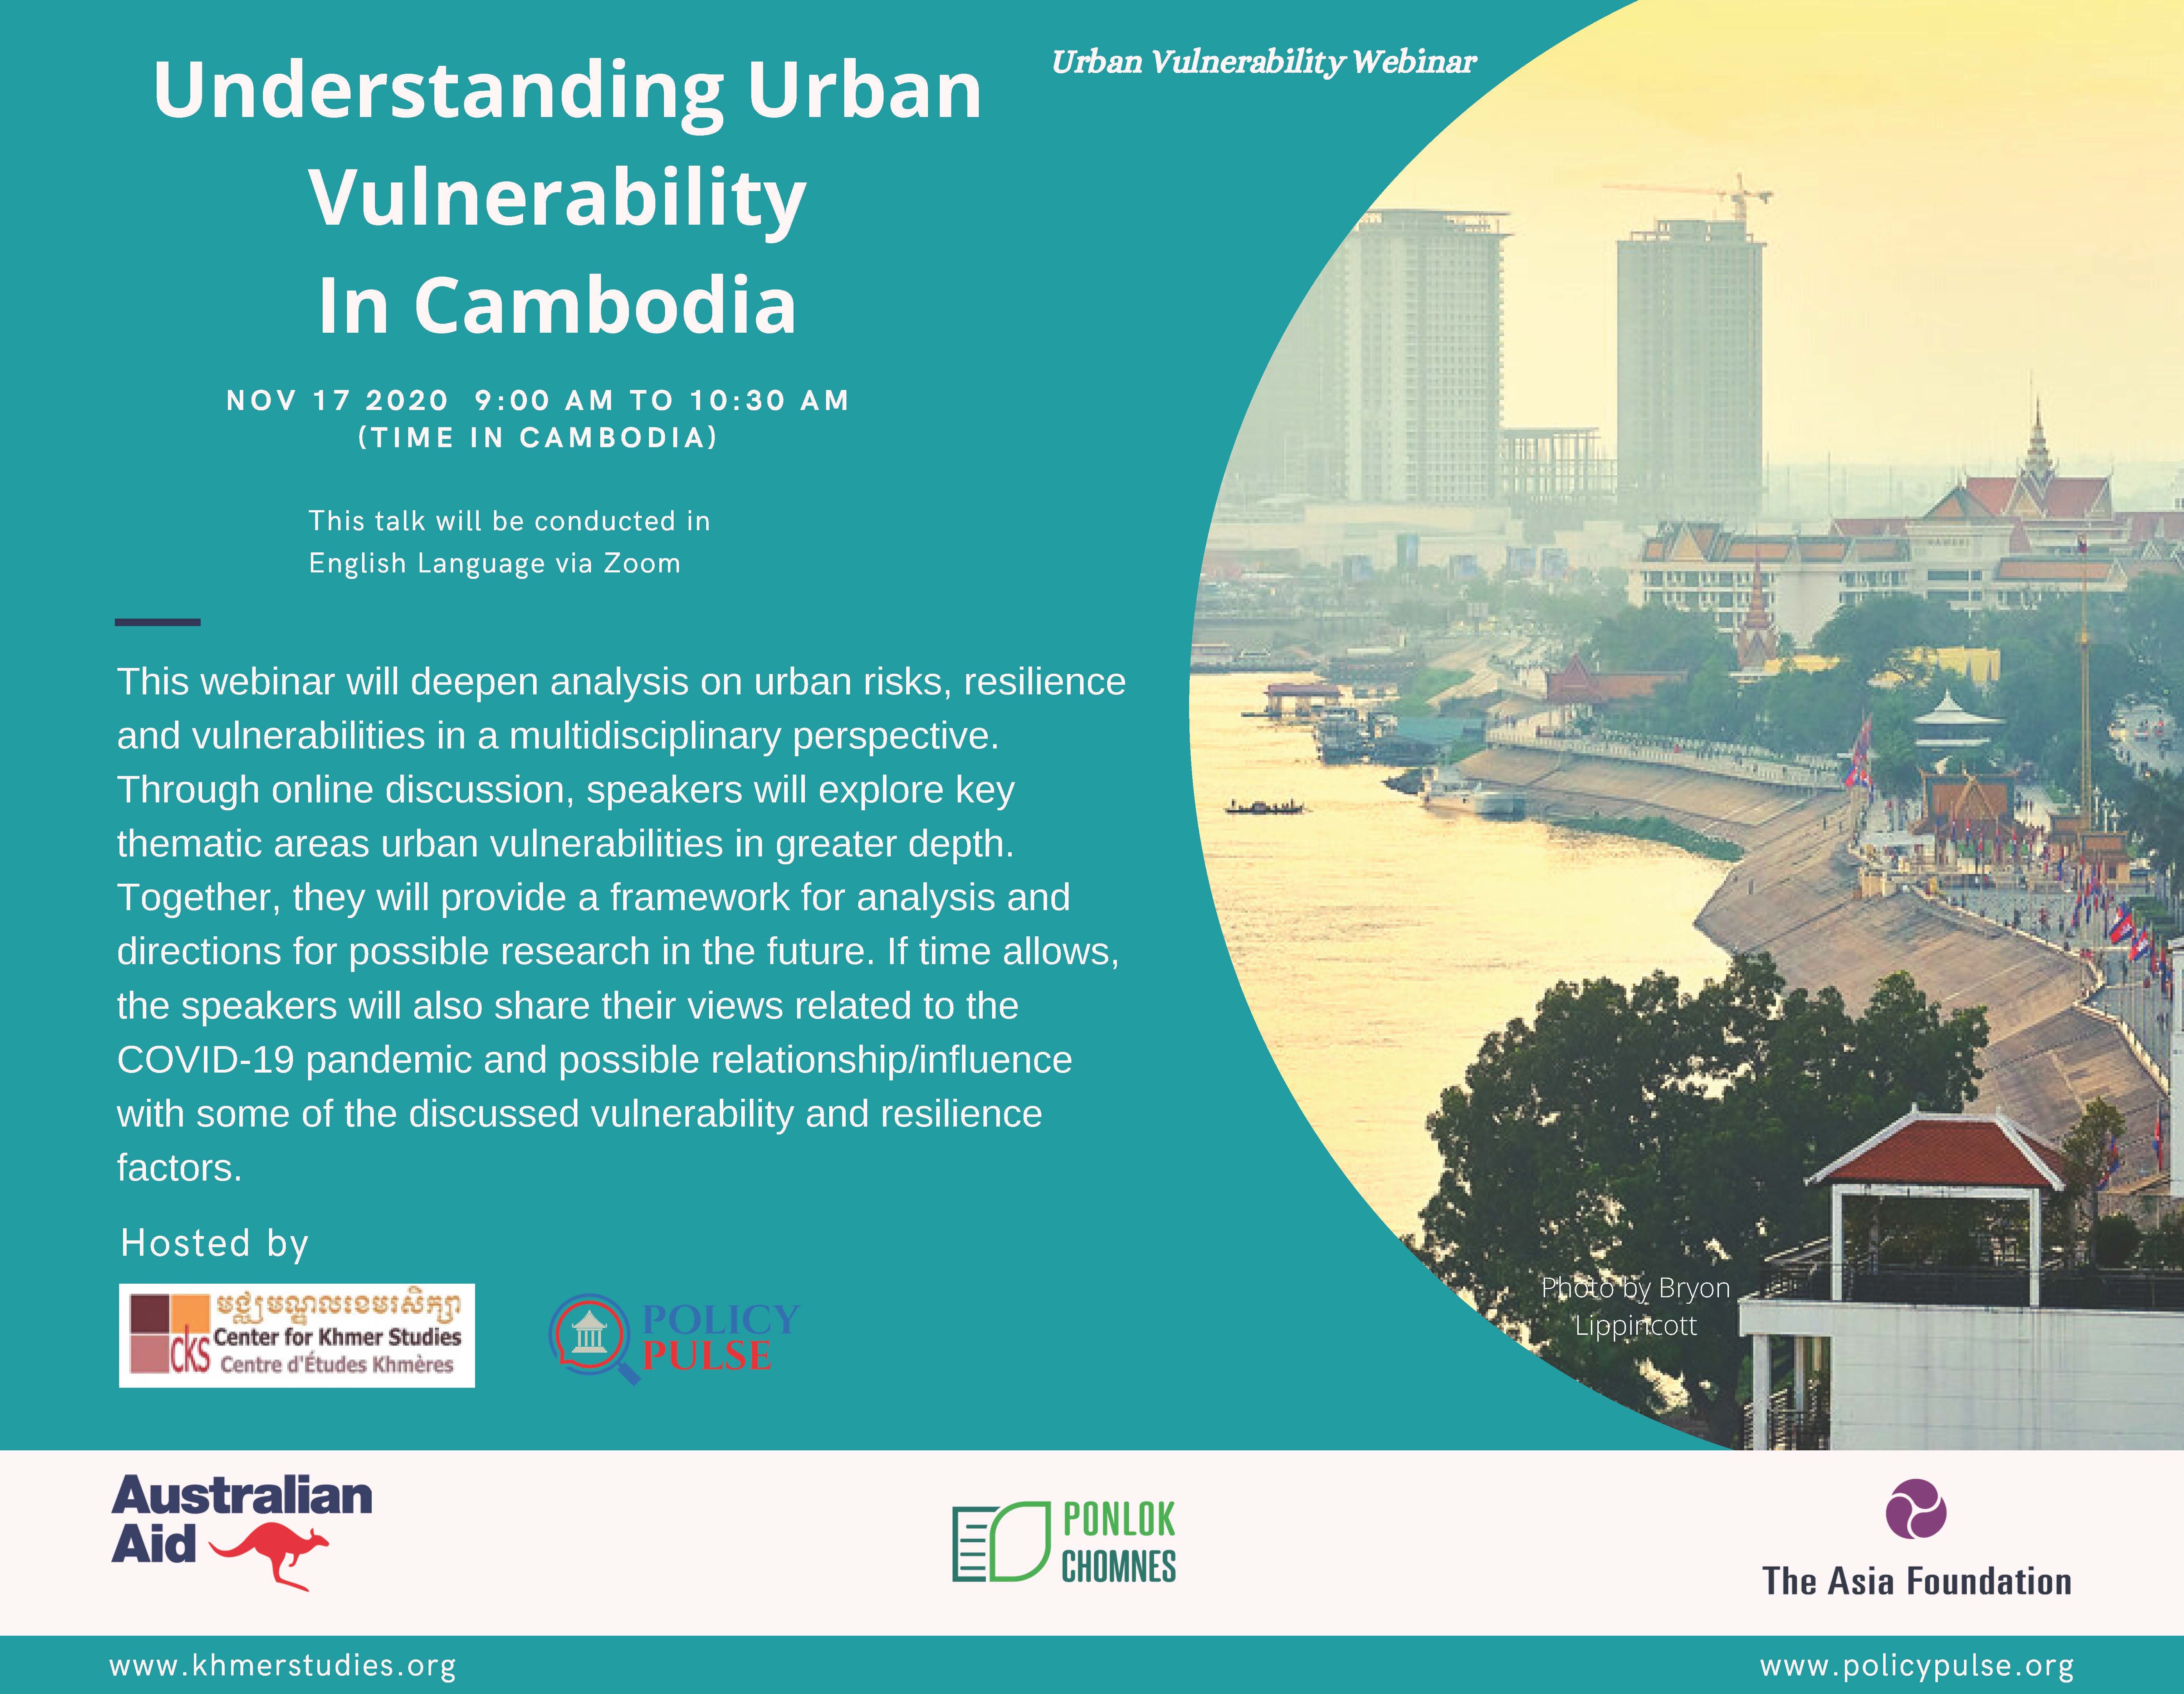 Urban Vulnerability Webinar: Understanding Urban Vulnerabilities in Cambodia